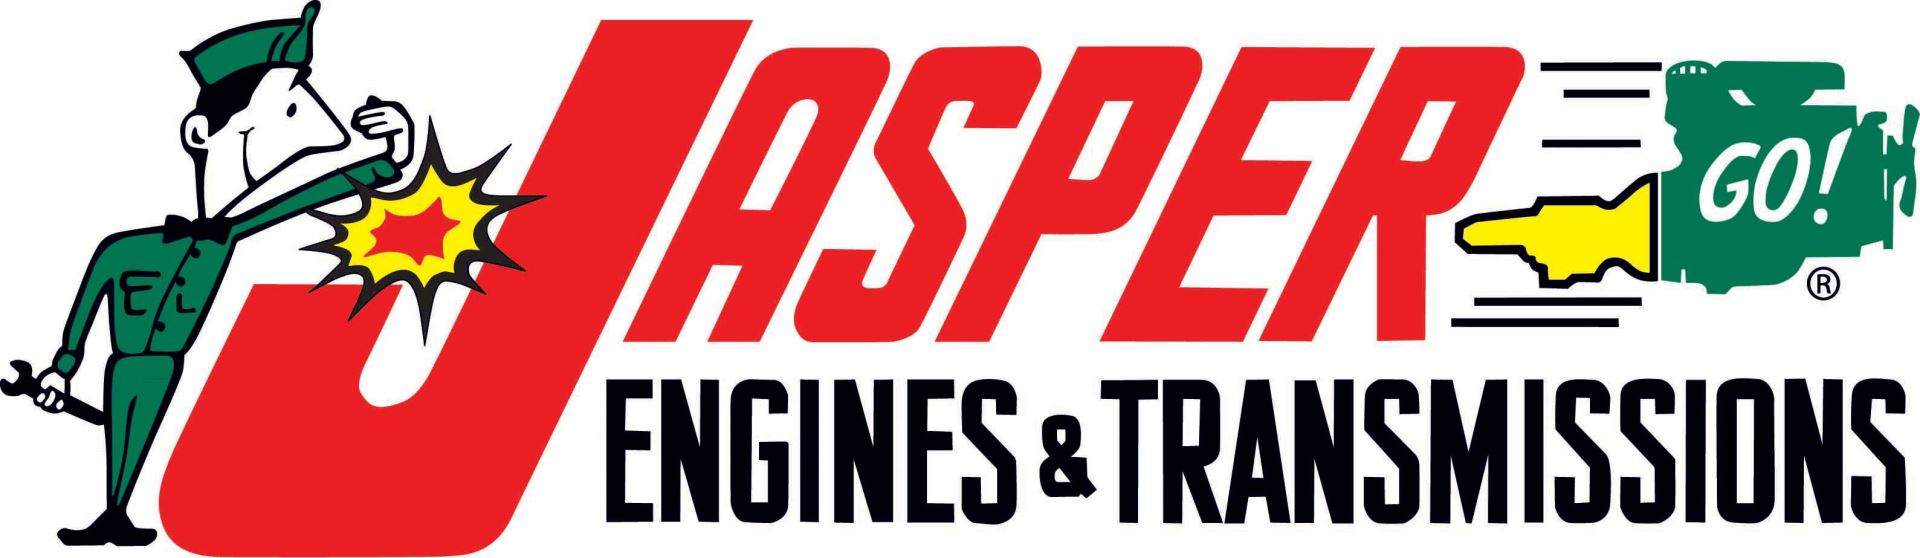 Jasper Engines & Transmissions | Automotive Service Association - Colorado